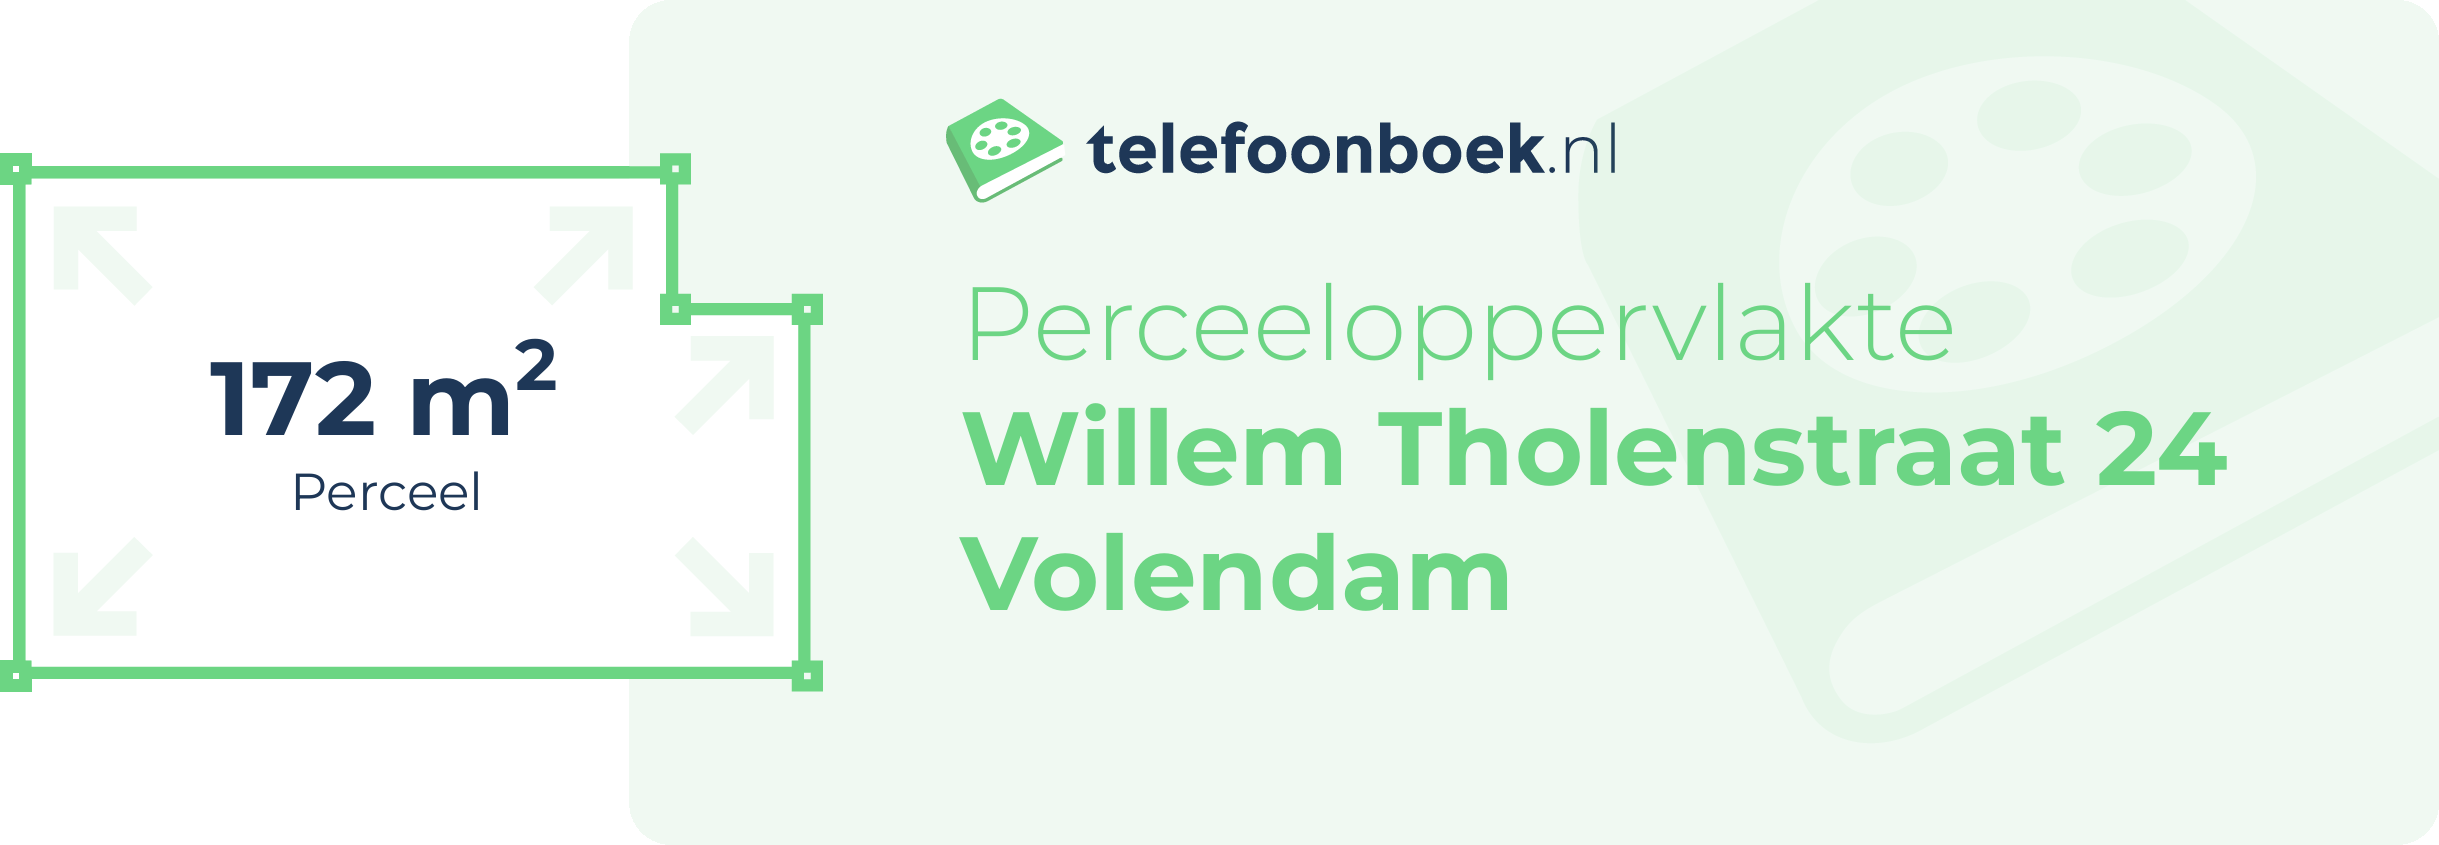 Perceeloppervlakte Willem Tholenstraat 24 Volendam